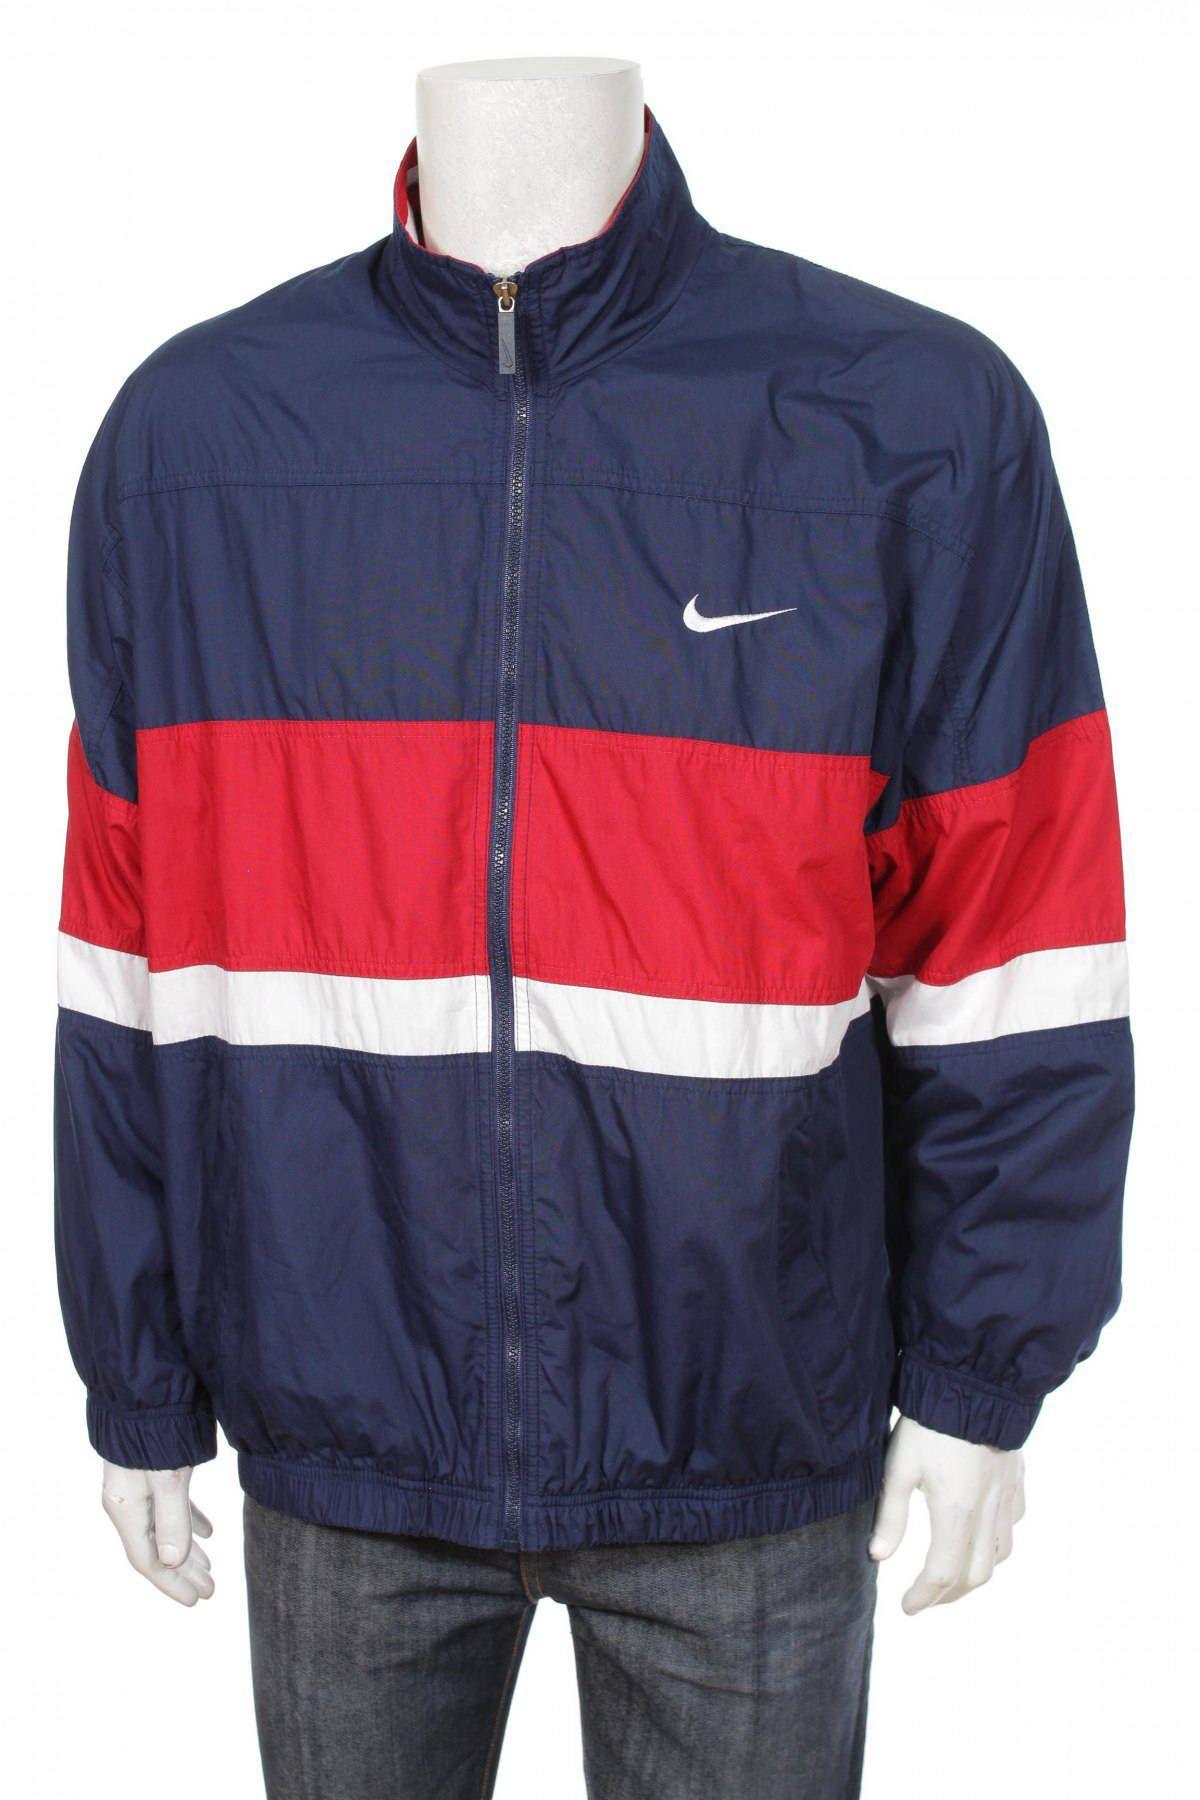 Red White Blue Nike Logo - Vintage 90s Nike Windbreaker Jacket Big Logo Spell Out Navy Blue Red